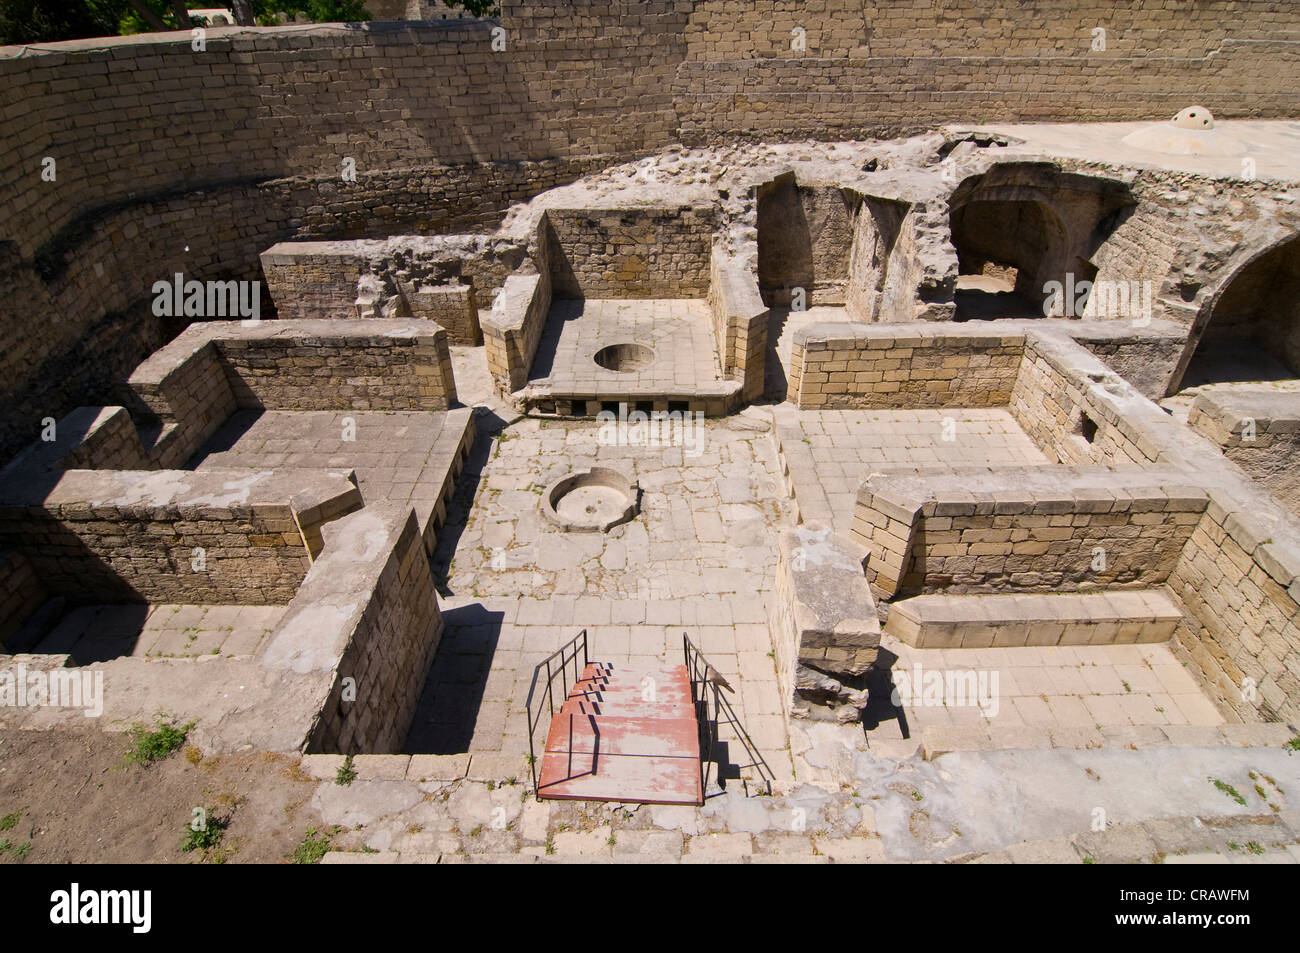 Palace of the Shirvanshahs, excavation site, Shirvan Shahs, Baku, Azerbaijan, Middle East Stock Photo